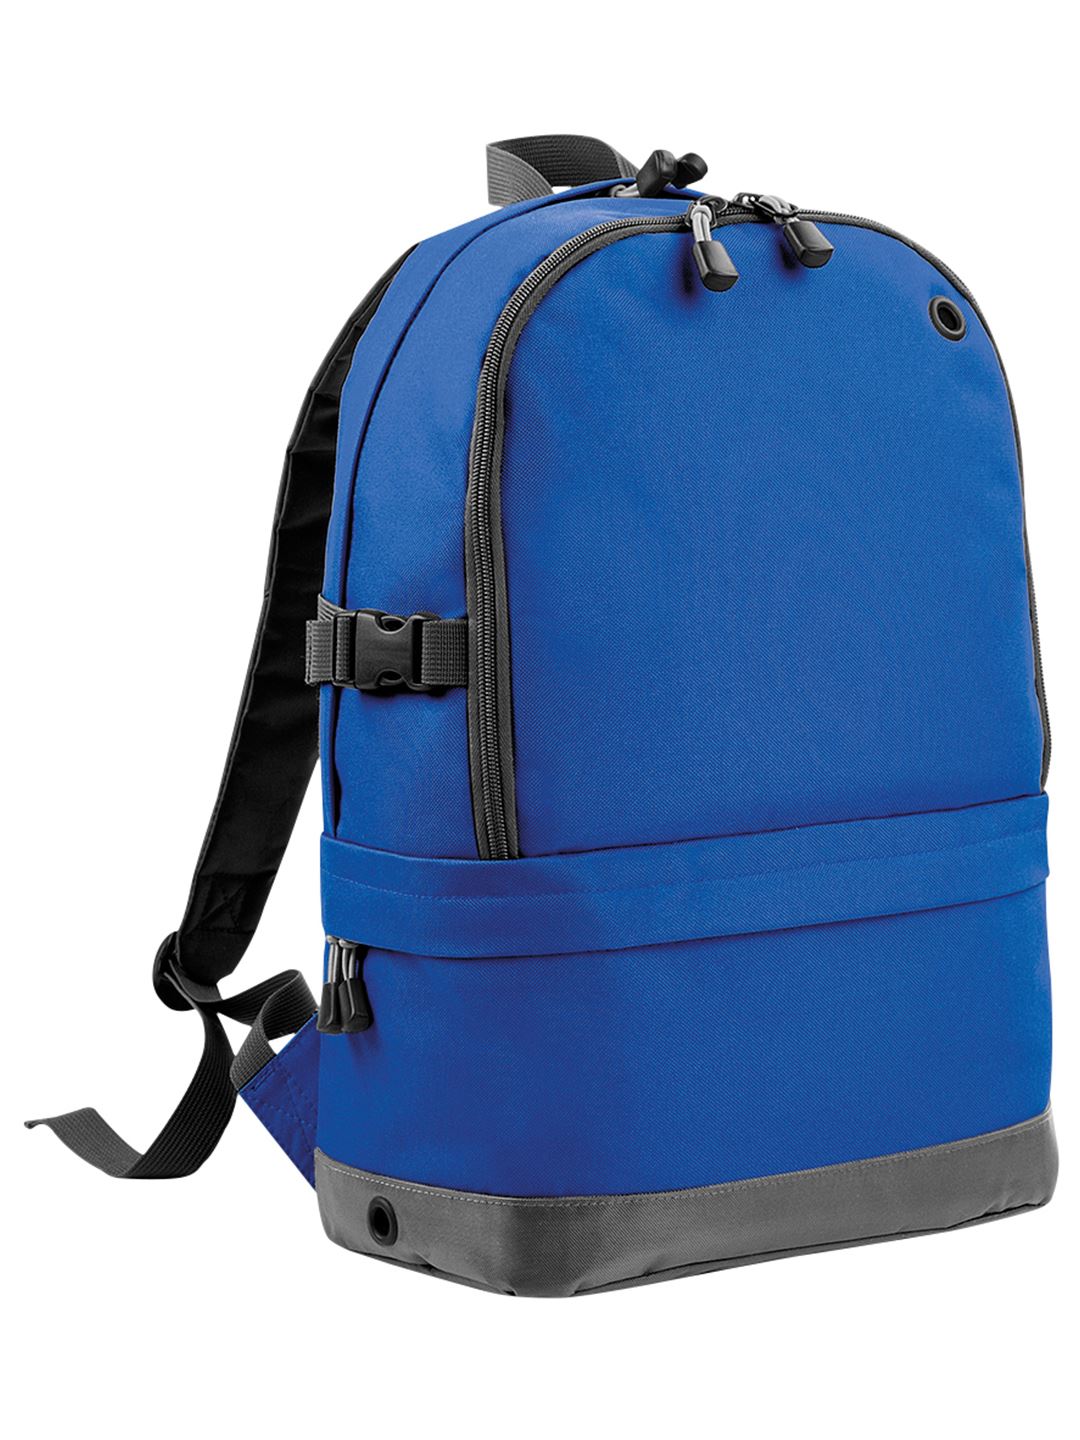 BG550 Pulse Sports Backpack secondary Image